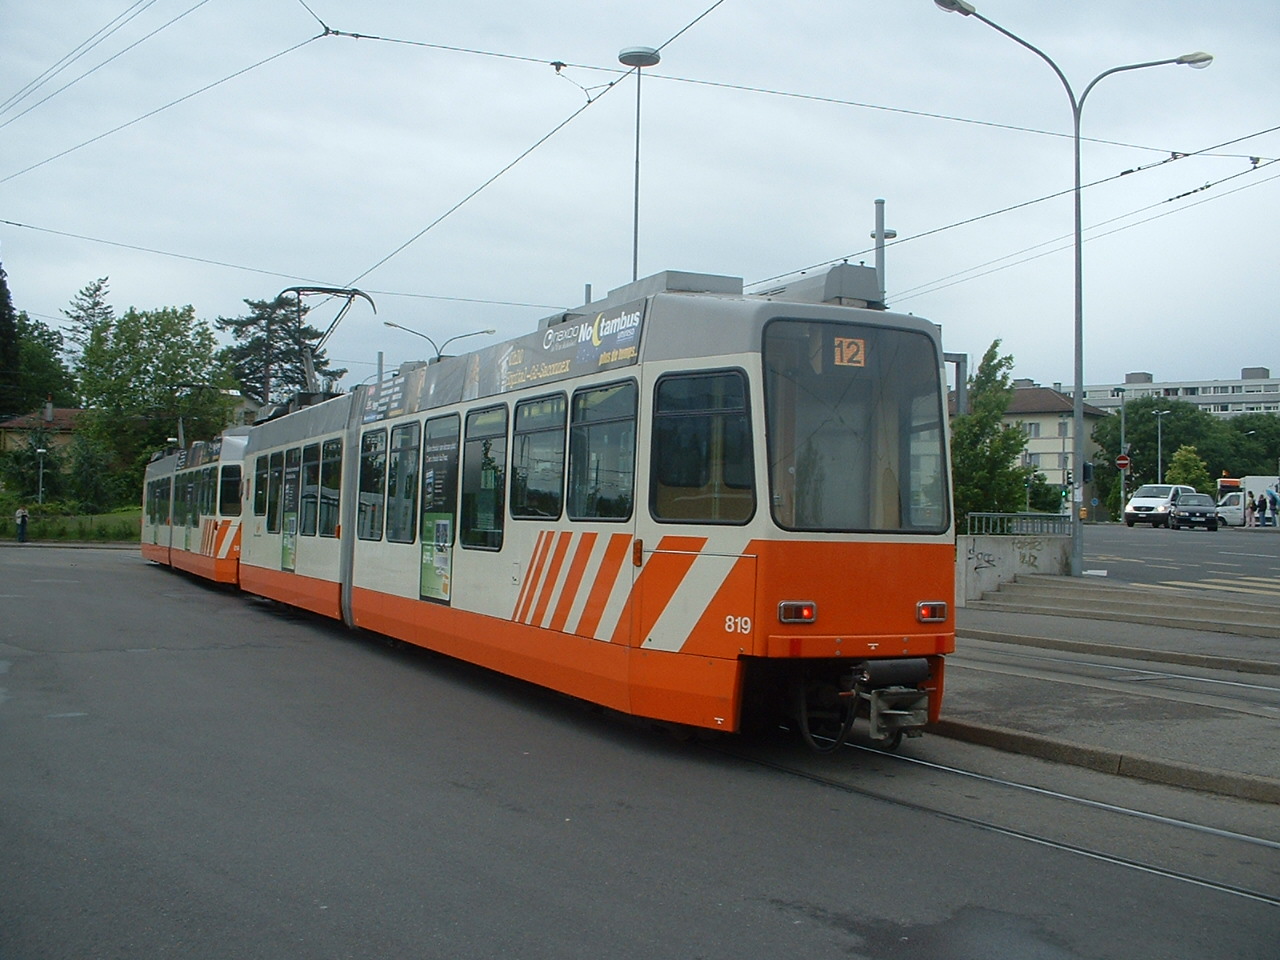 Geneva tram